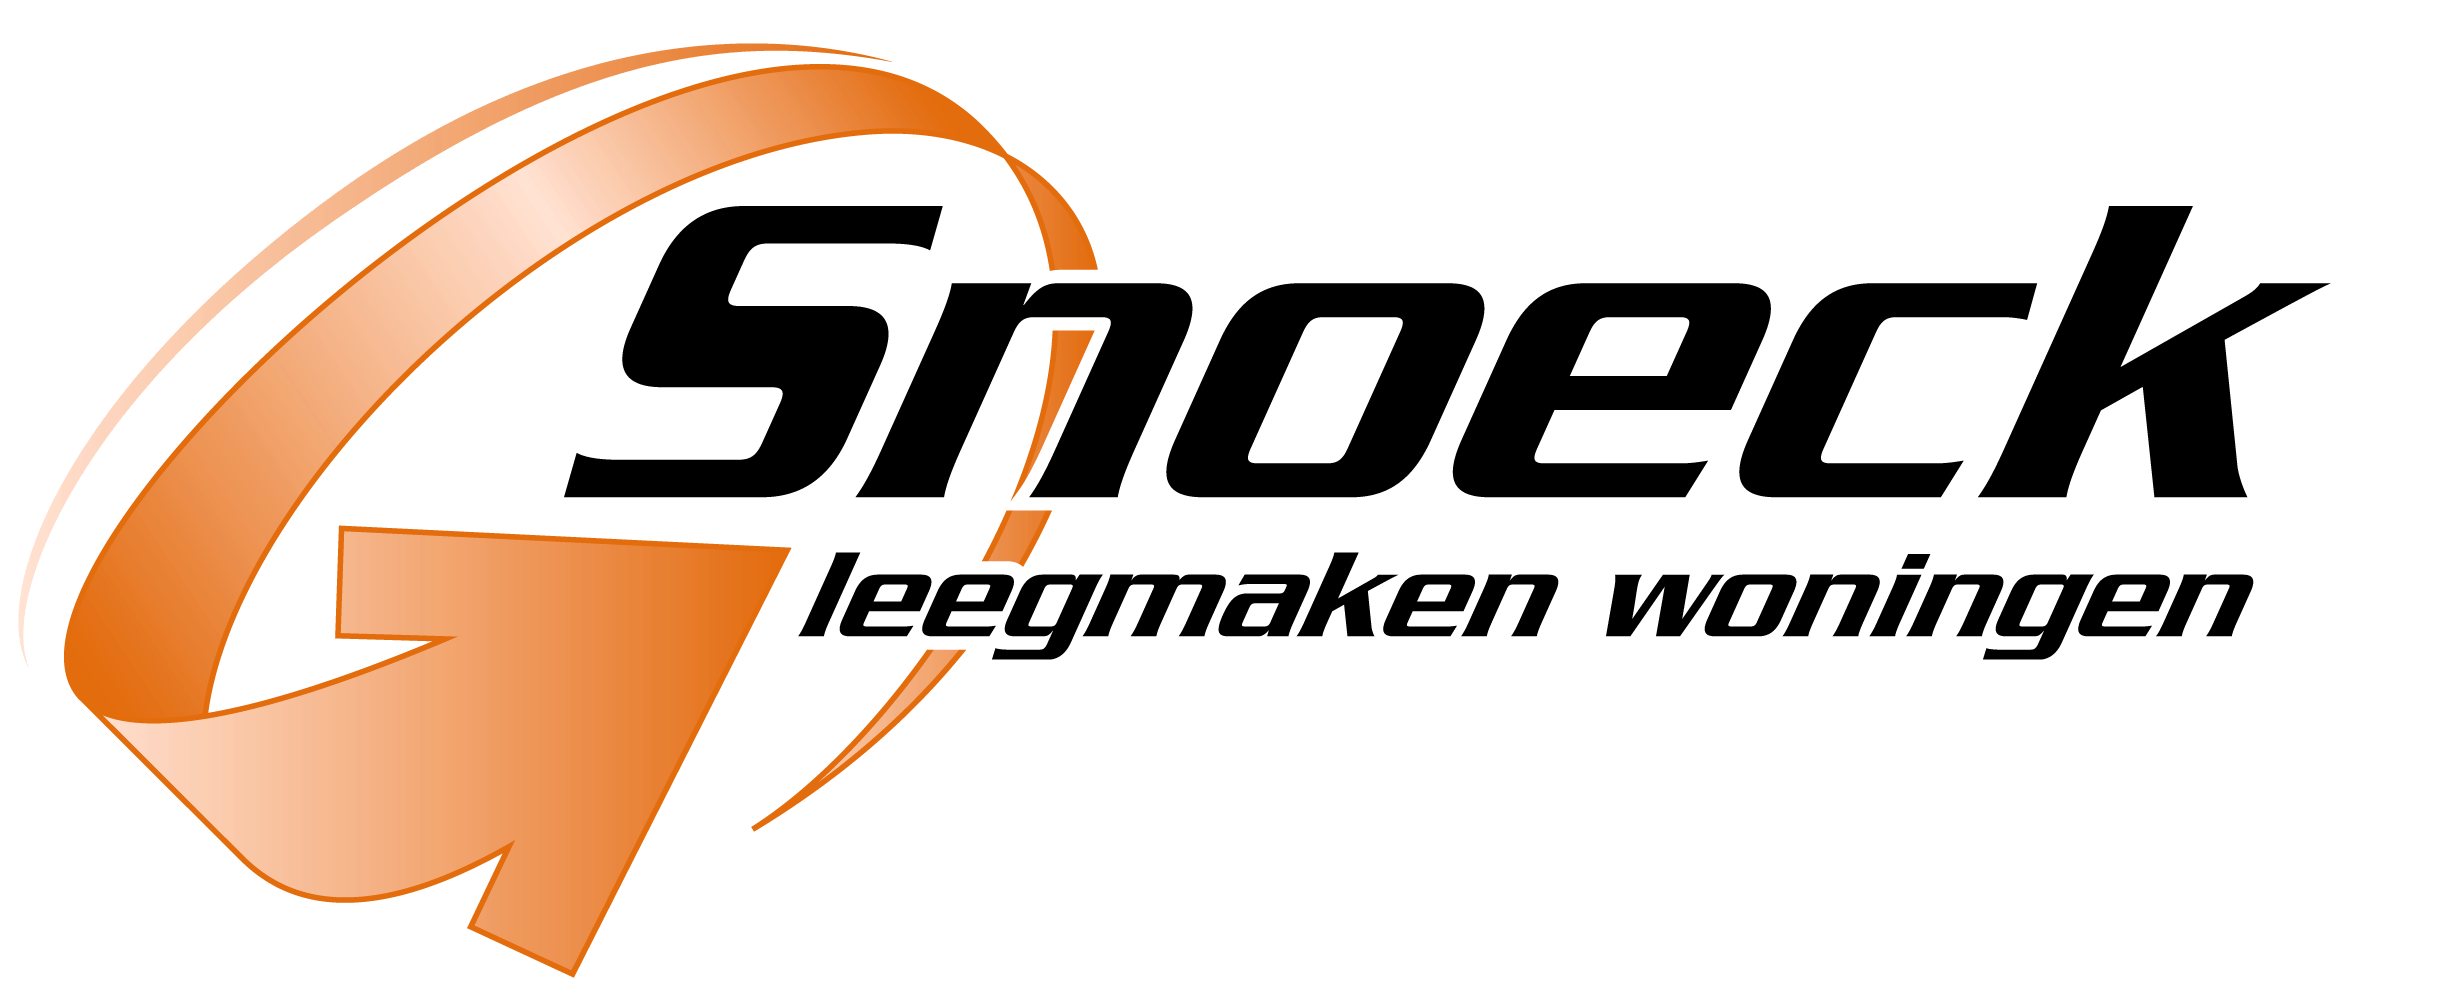 Snoeck logo